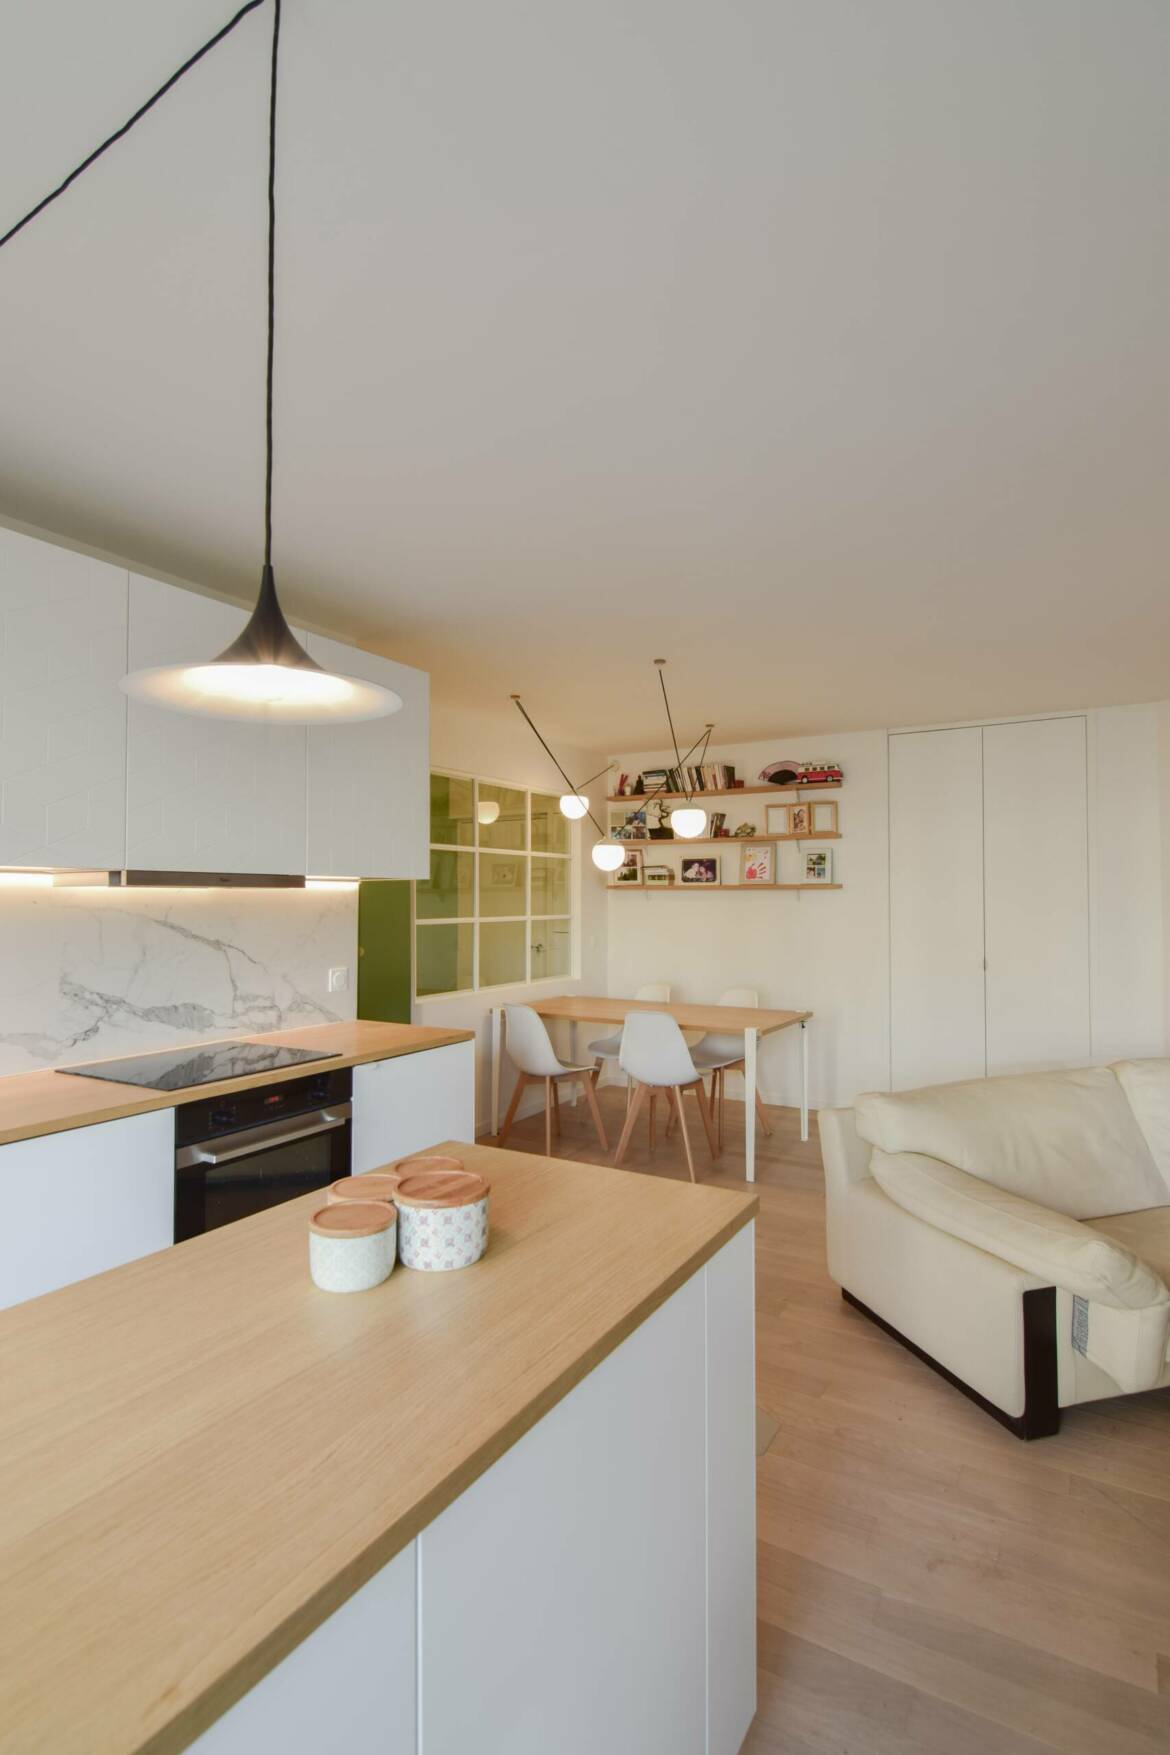 architecte-restructuration-appartement-cuisine-ouverte-AREA-Studio-min-scaled.jpg